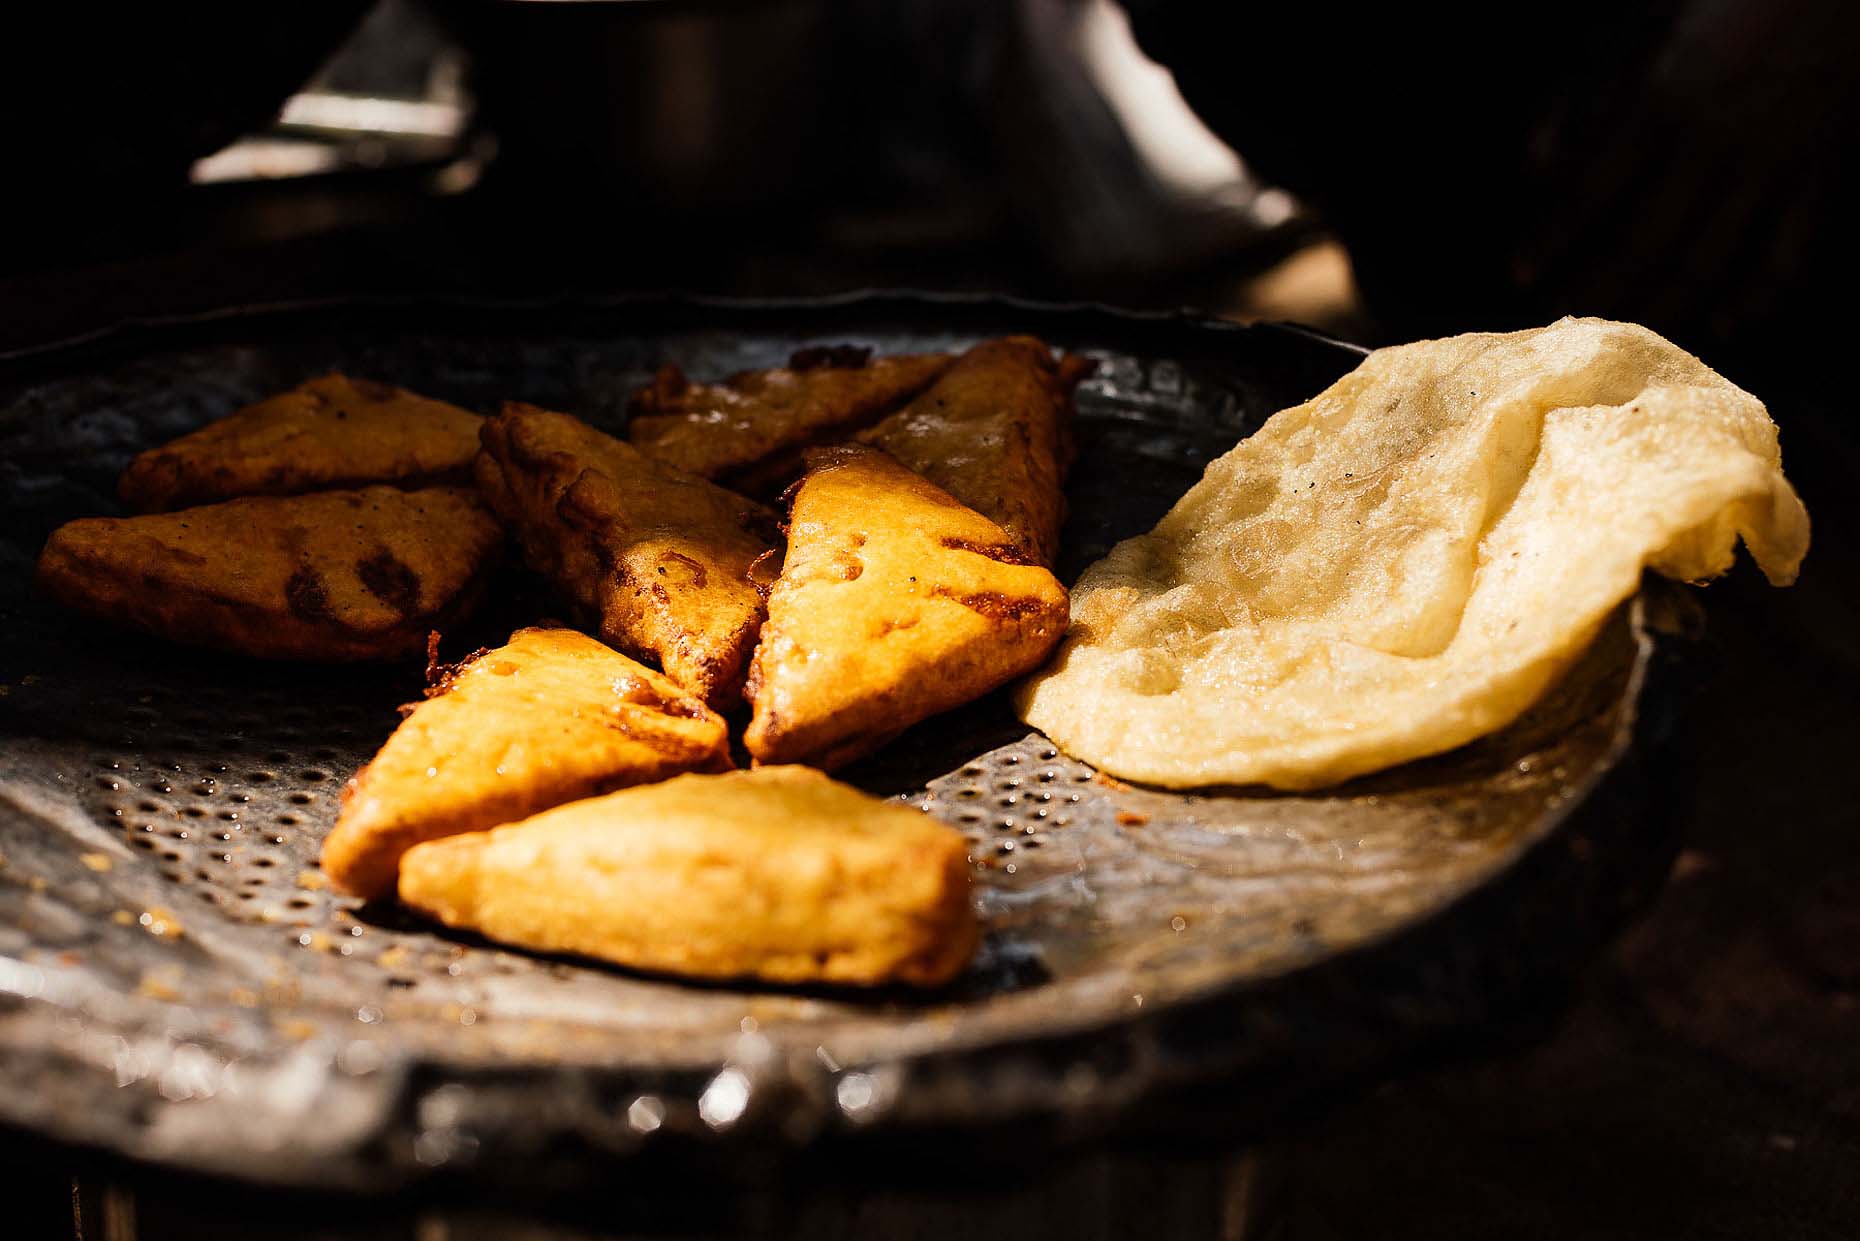 samosa-snack-fried-food-bhature-chandigarh-india-14